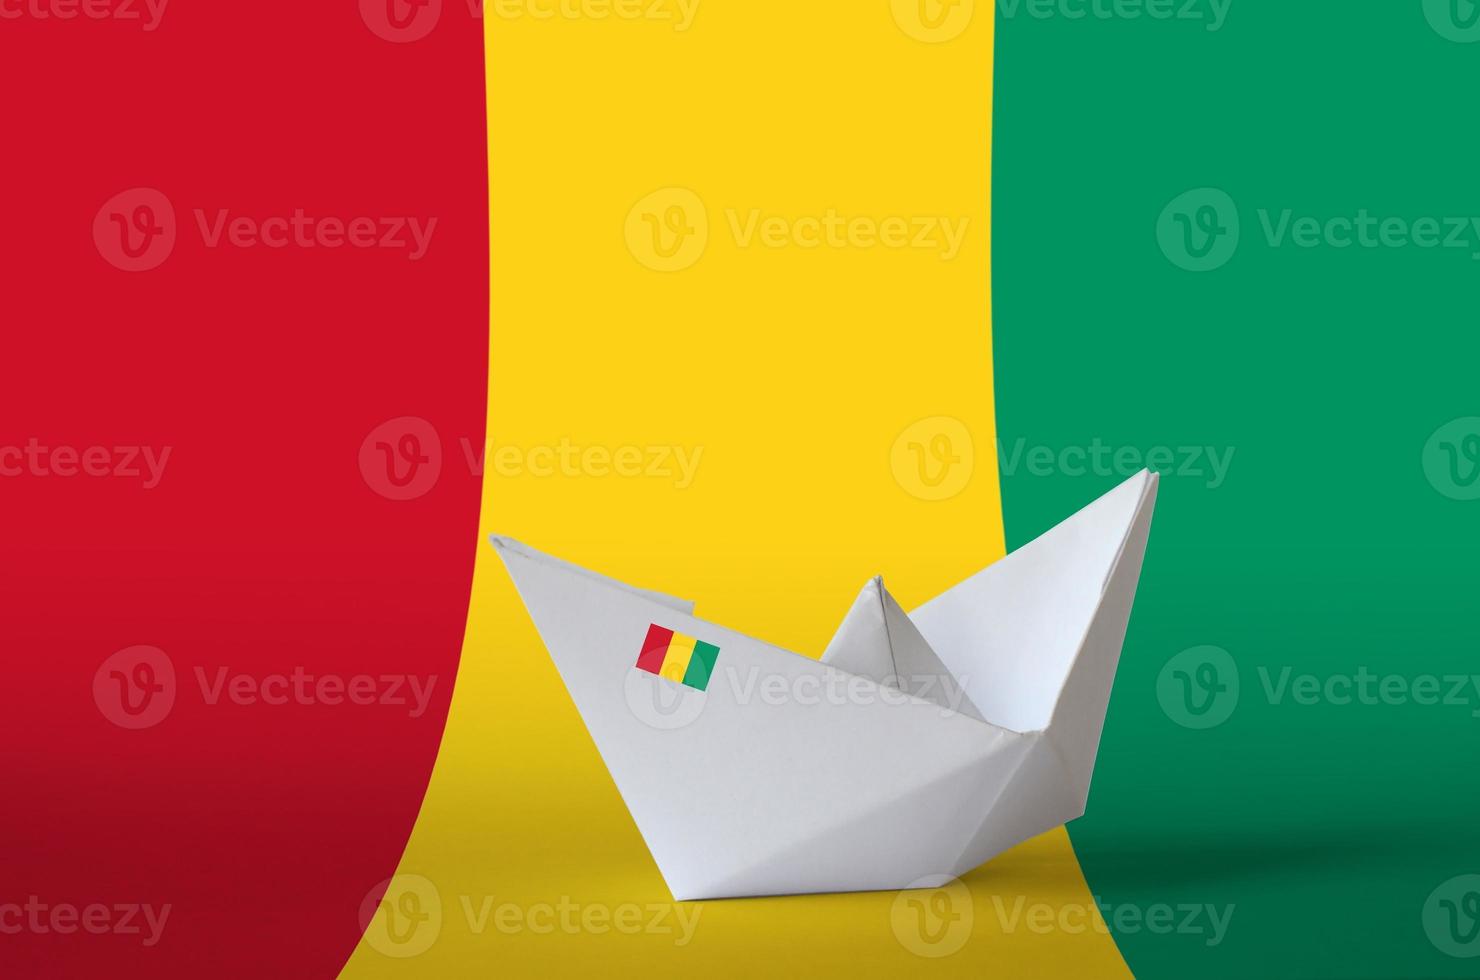 bandera de guinea representada en primer plano de barco de origami de papel. concepto de artes hechas a mano foto